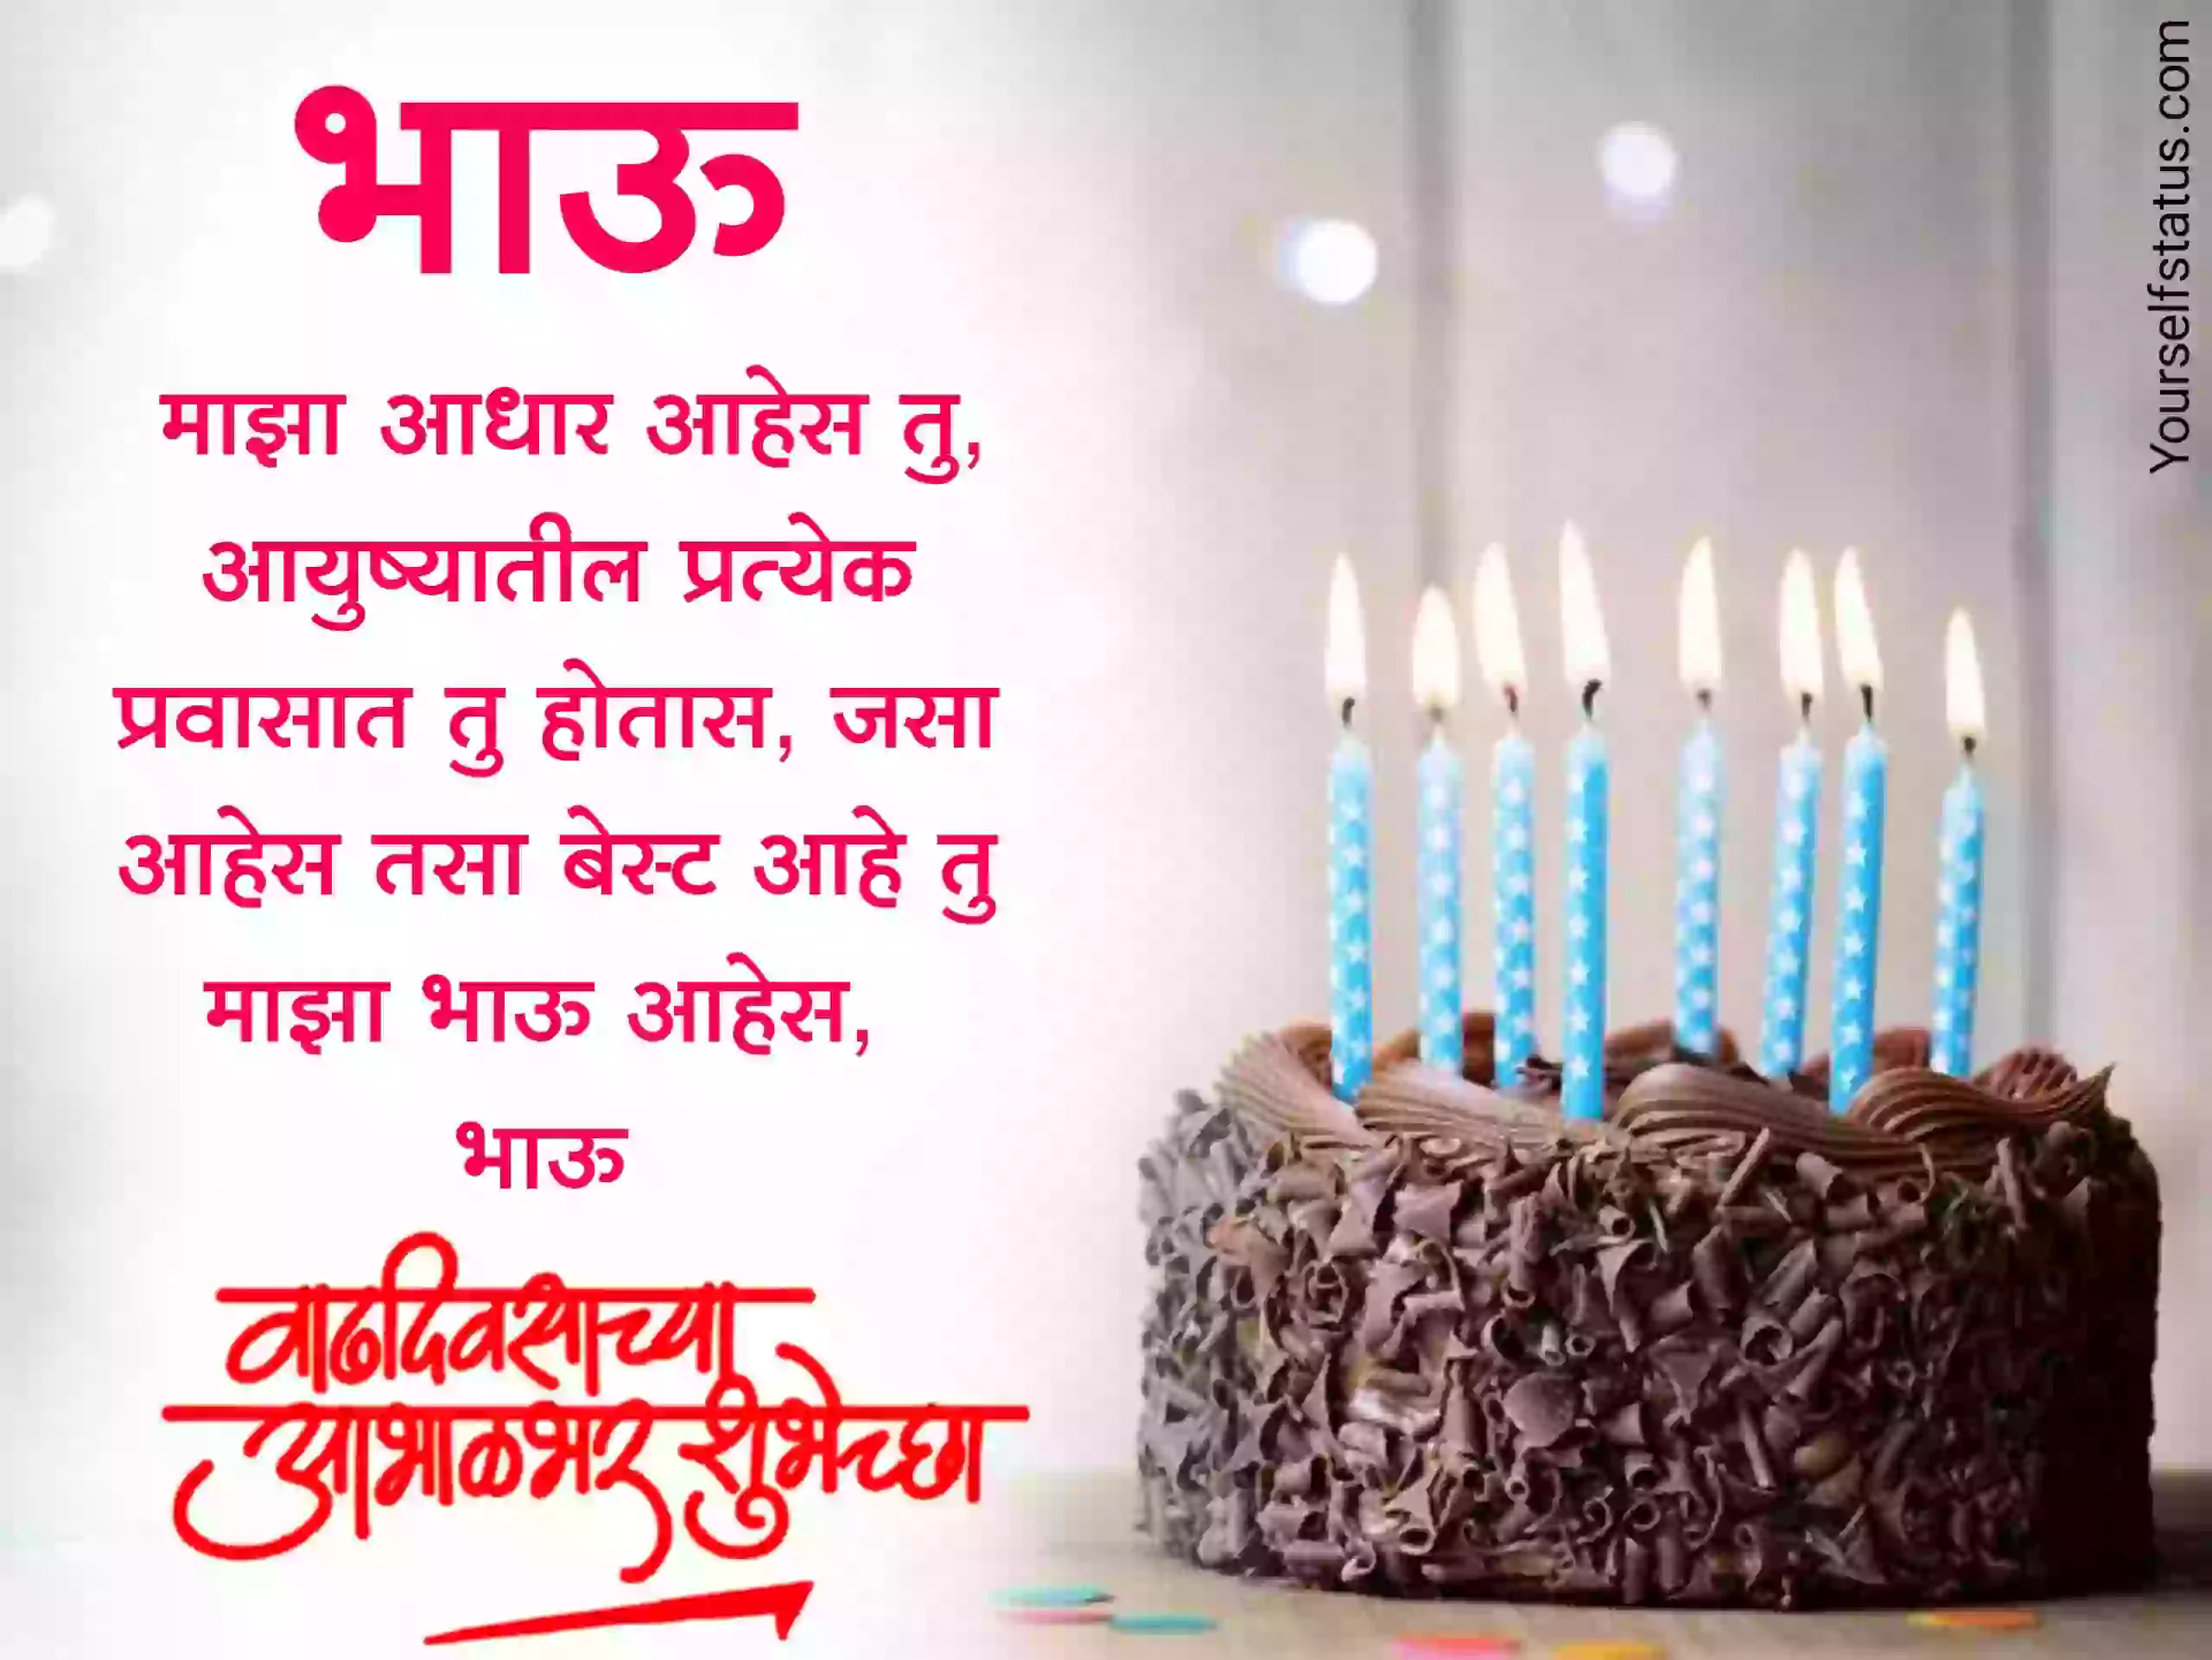 brother birthday wishes in marathi